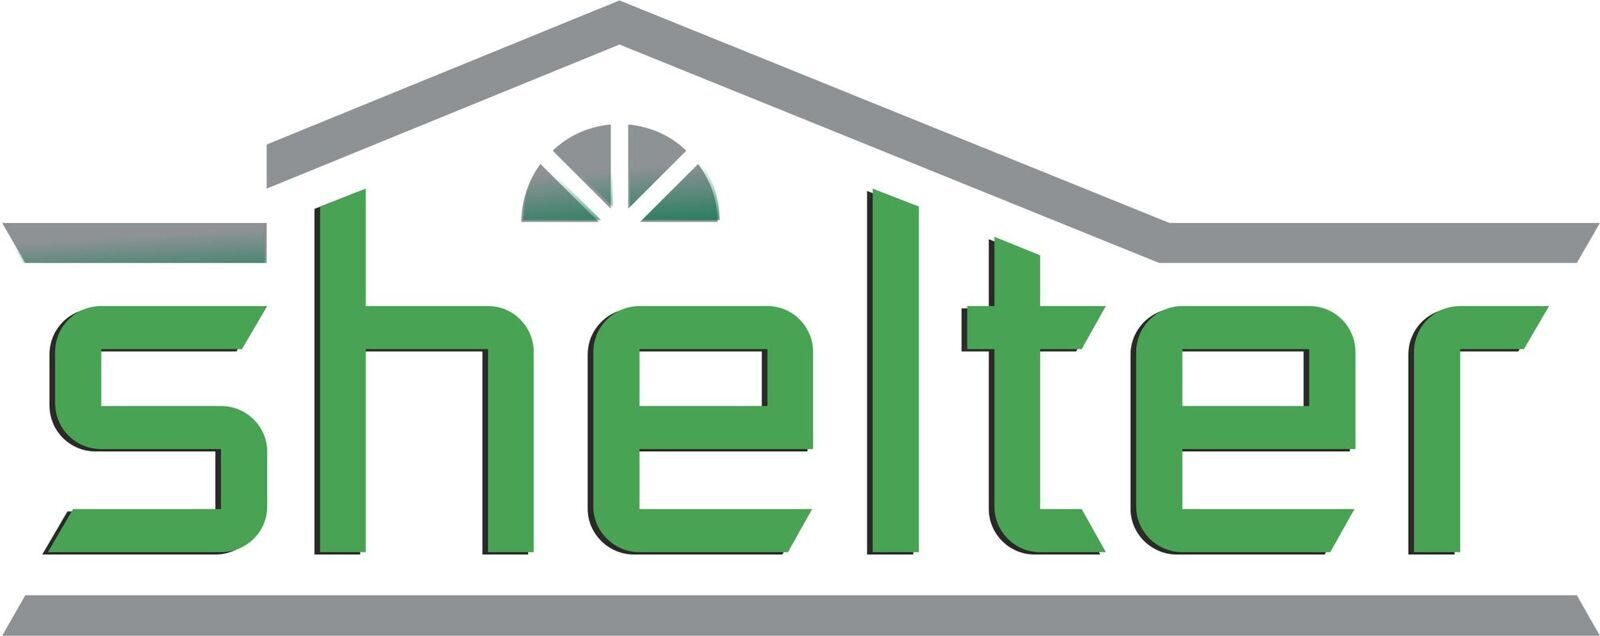 logo_shelter